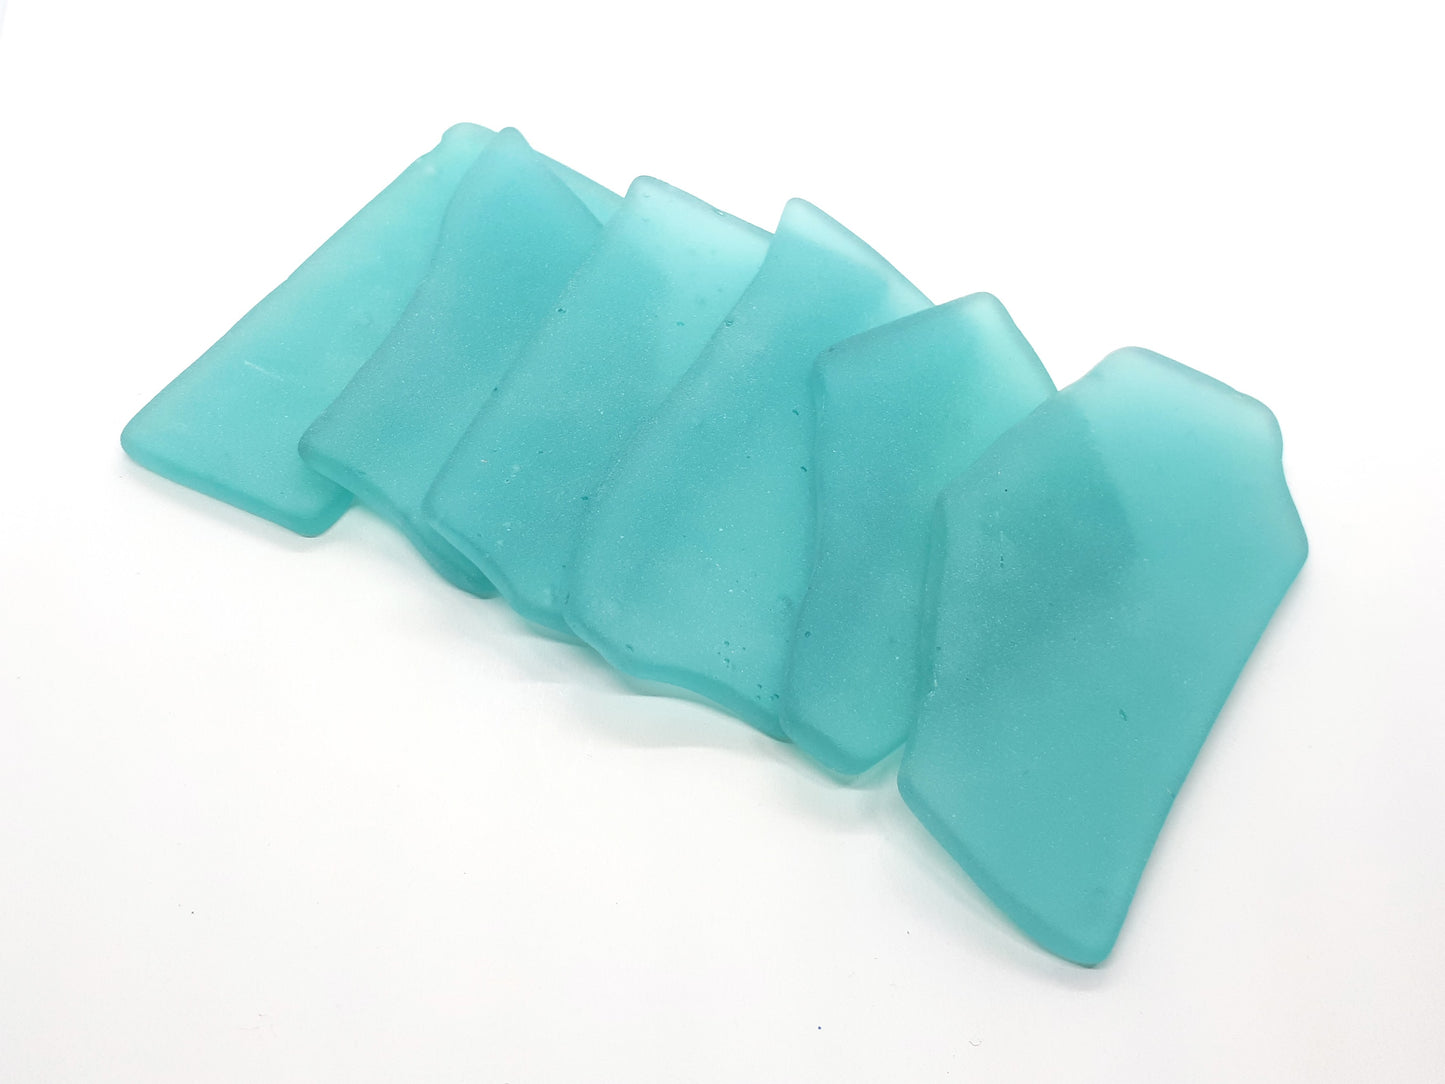 Teal sea glass place cards - Set of 20 - Irregular shapes